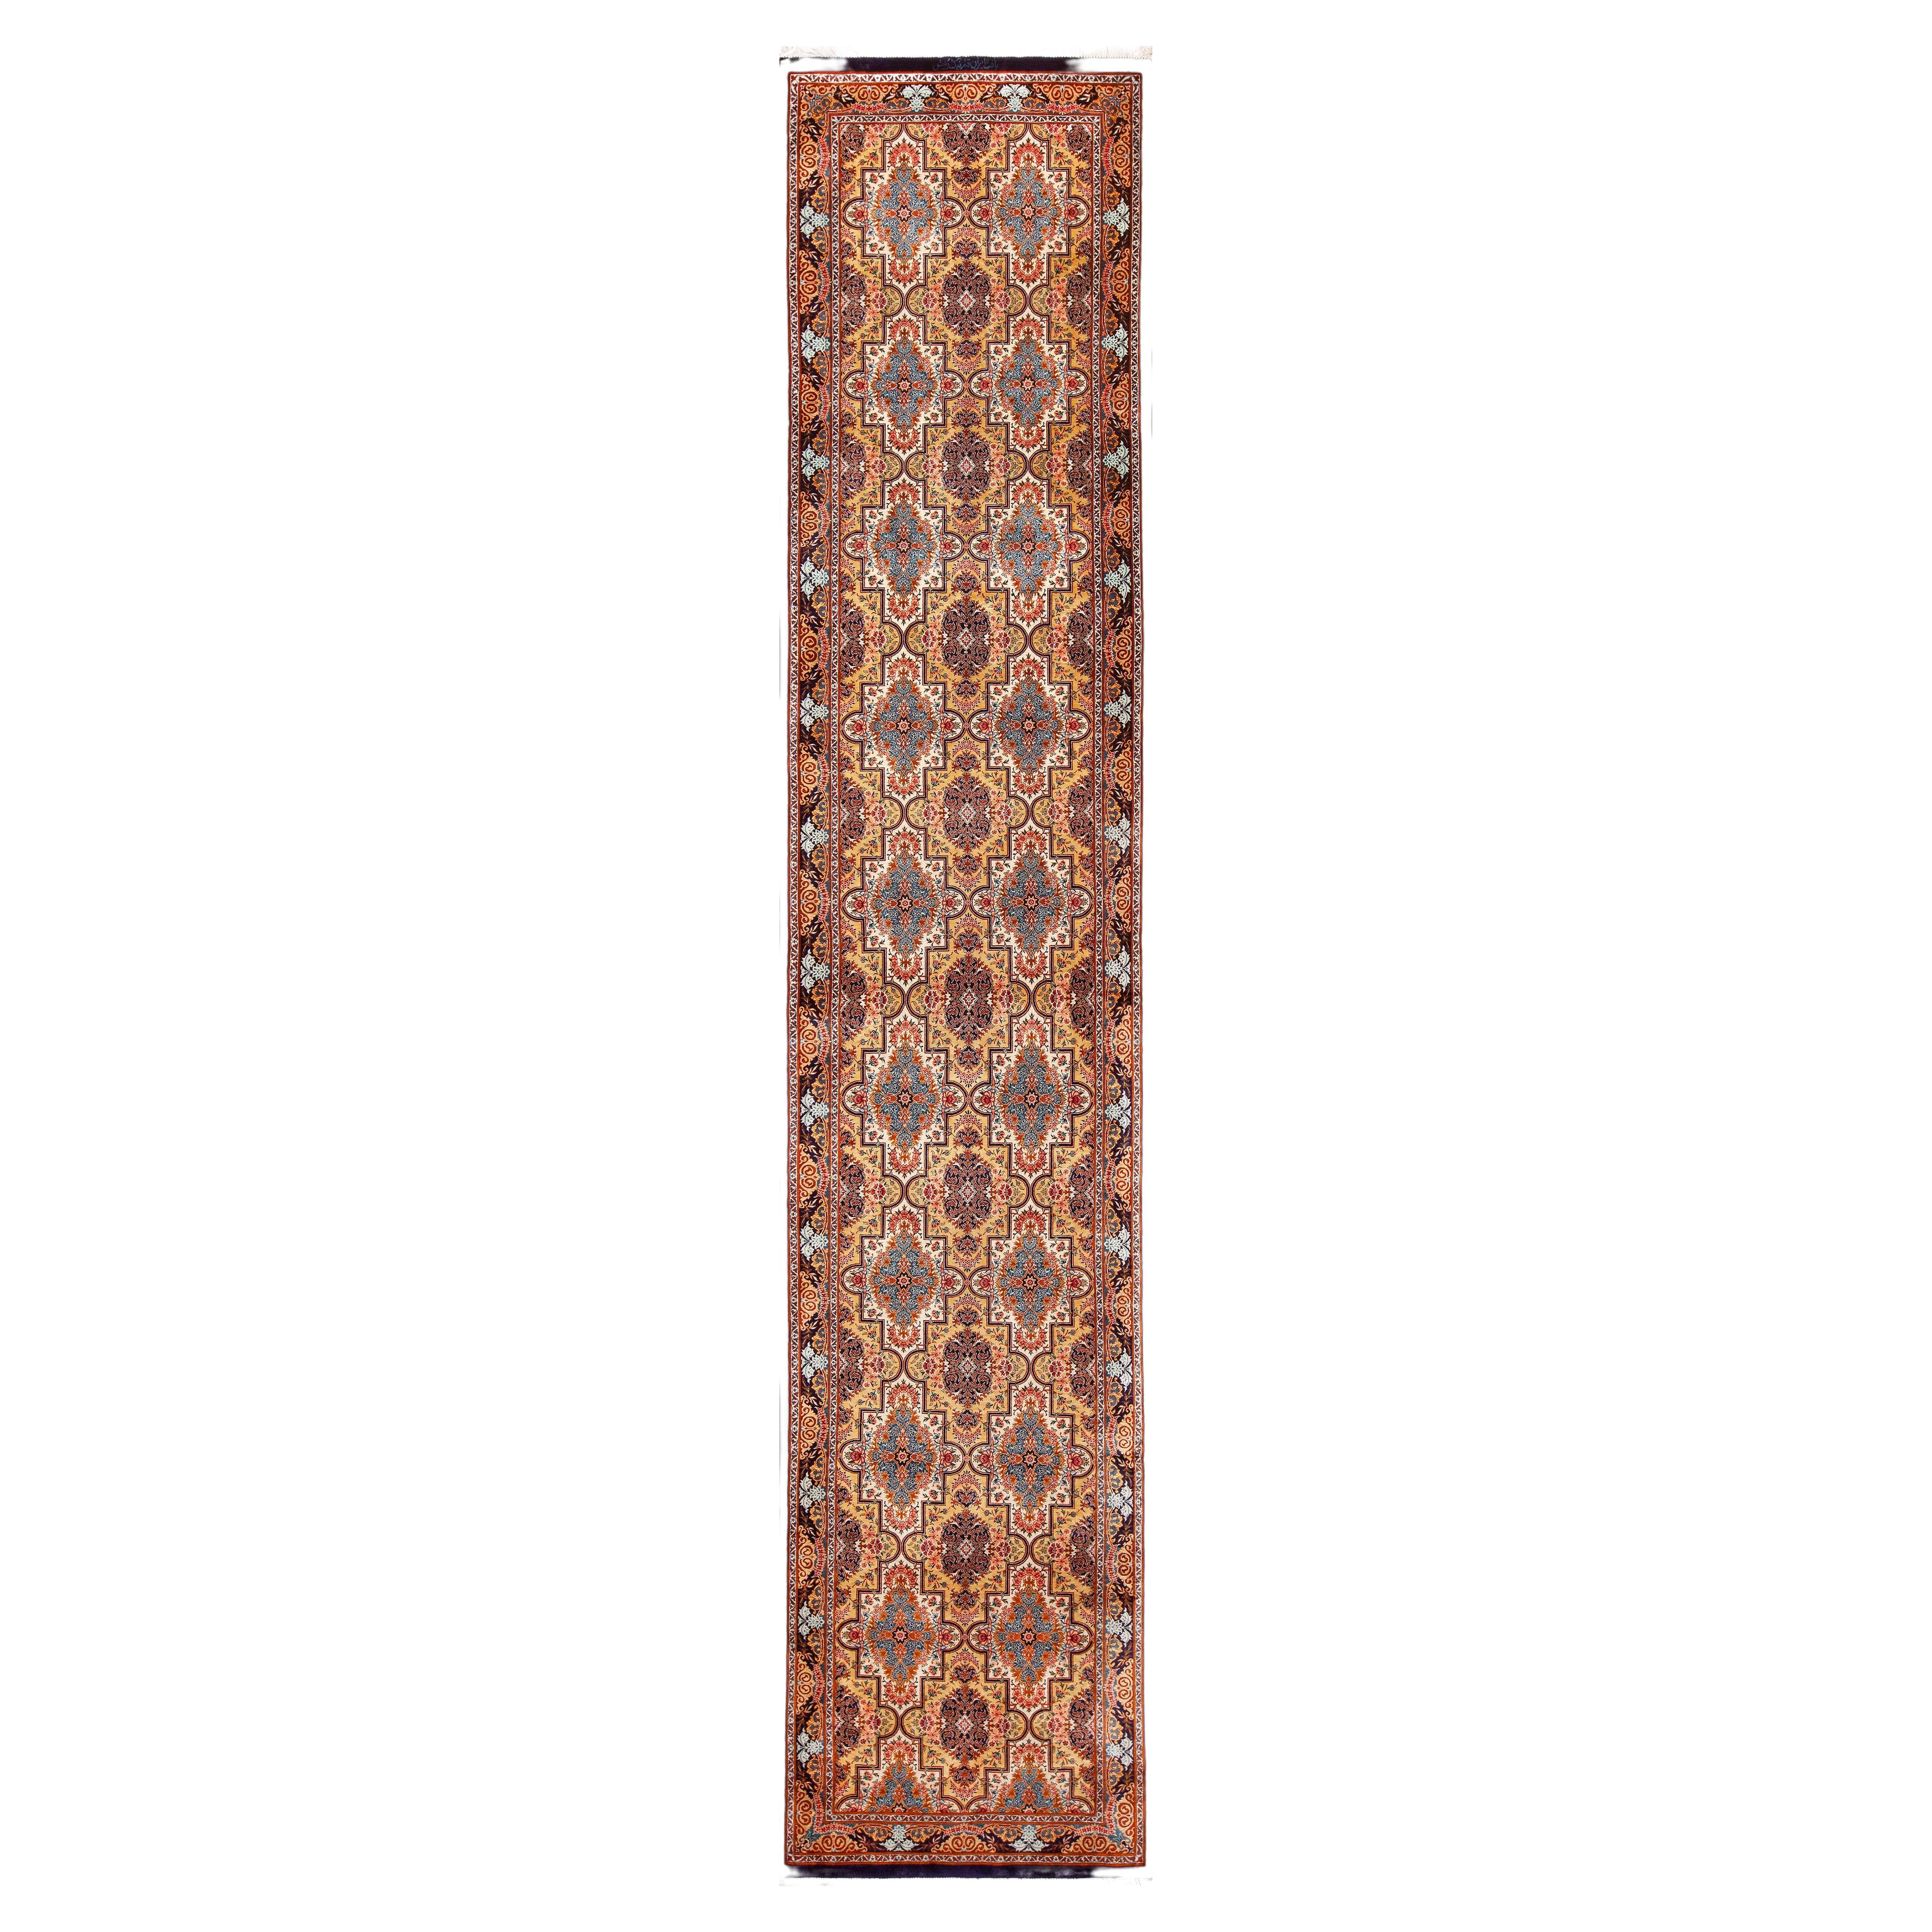 Intricate Fine Luxurious Persian Qum Silk Hallway Runner Rug 2'7" x 12'9" For Sale